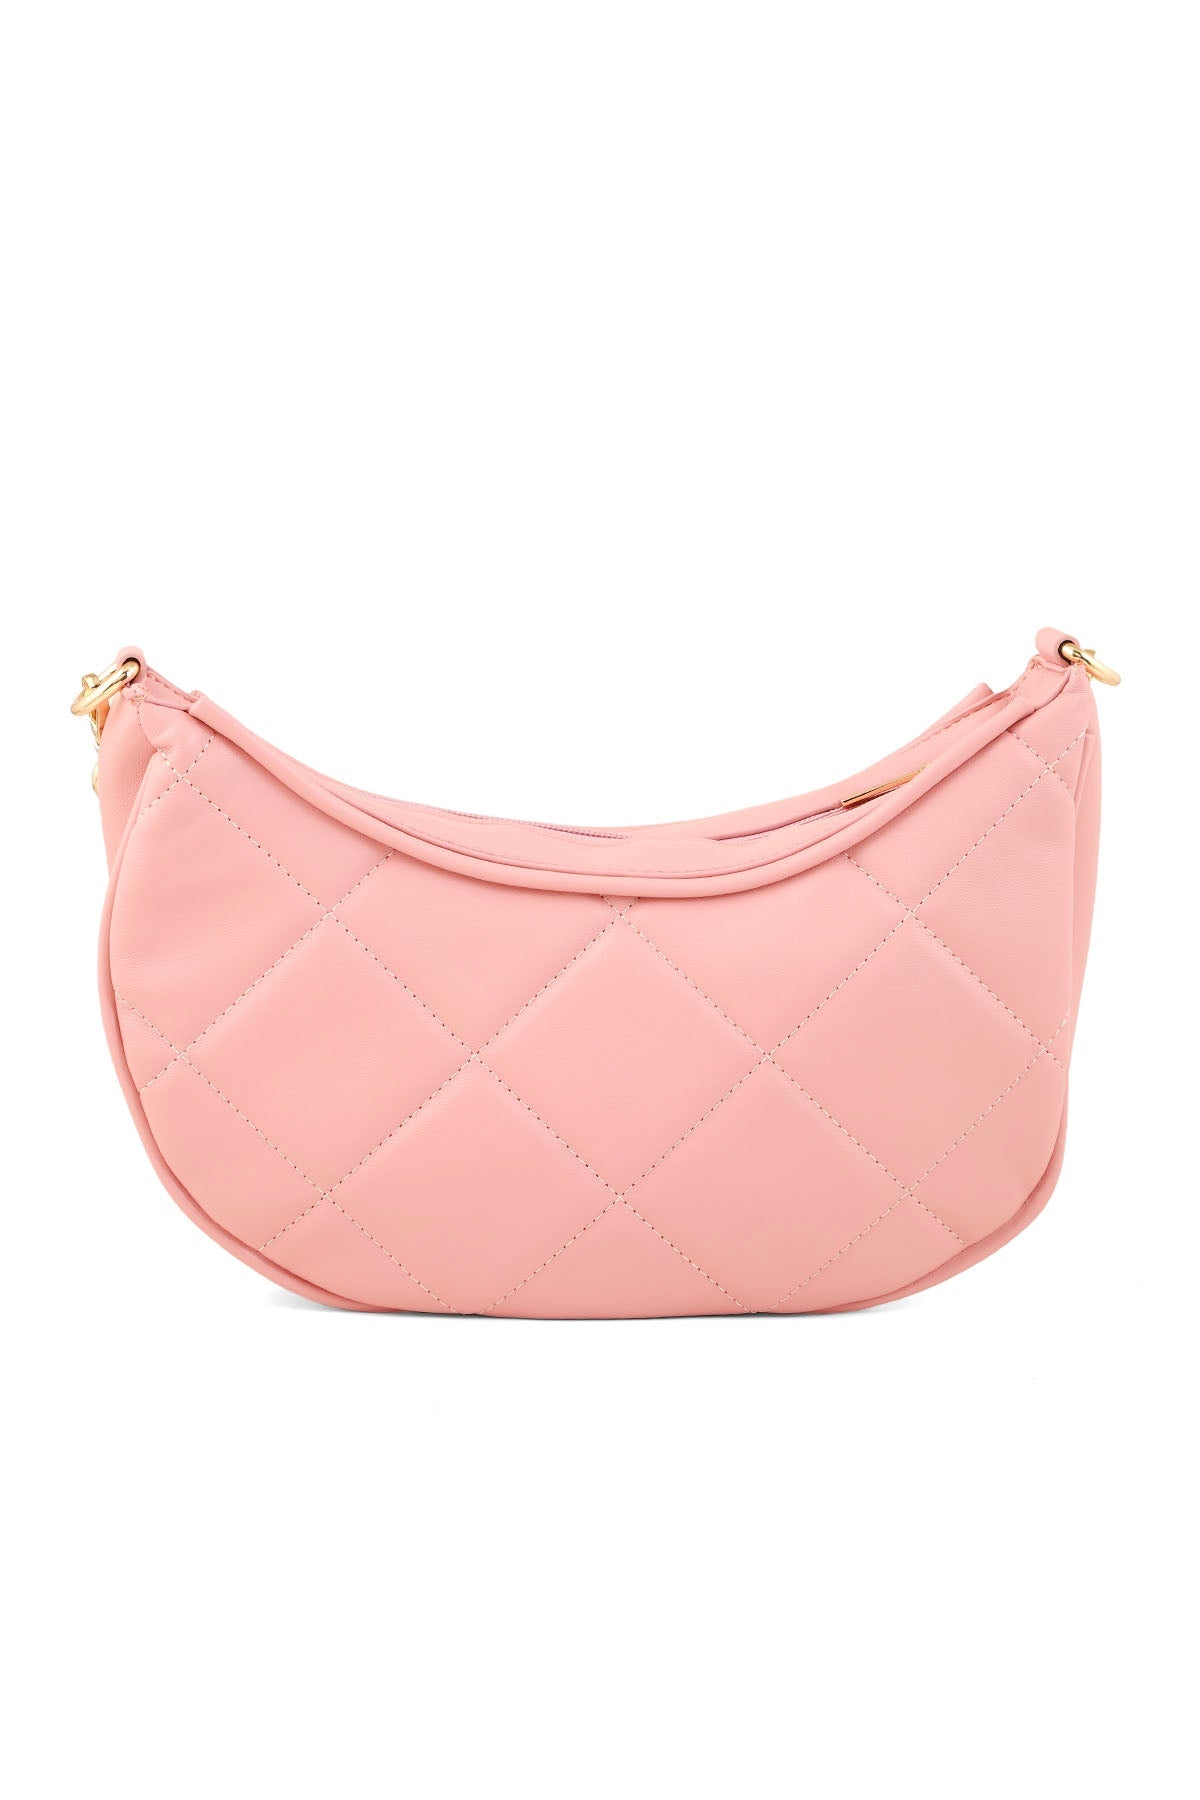 Baguette Shoulder Bags B15137-Pink